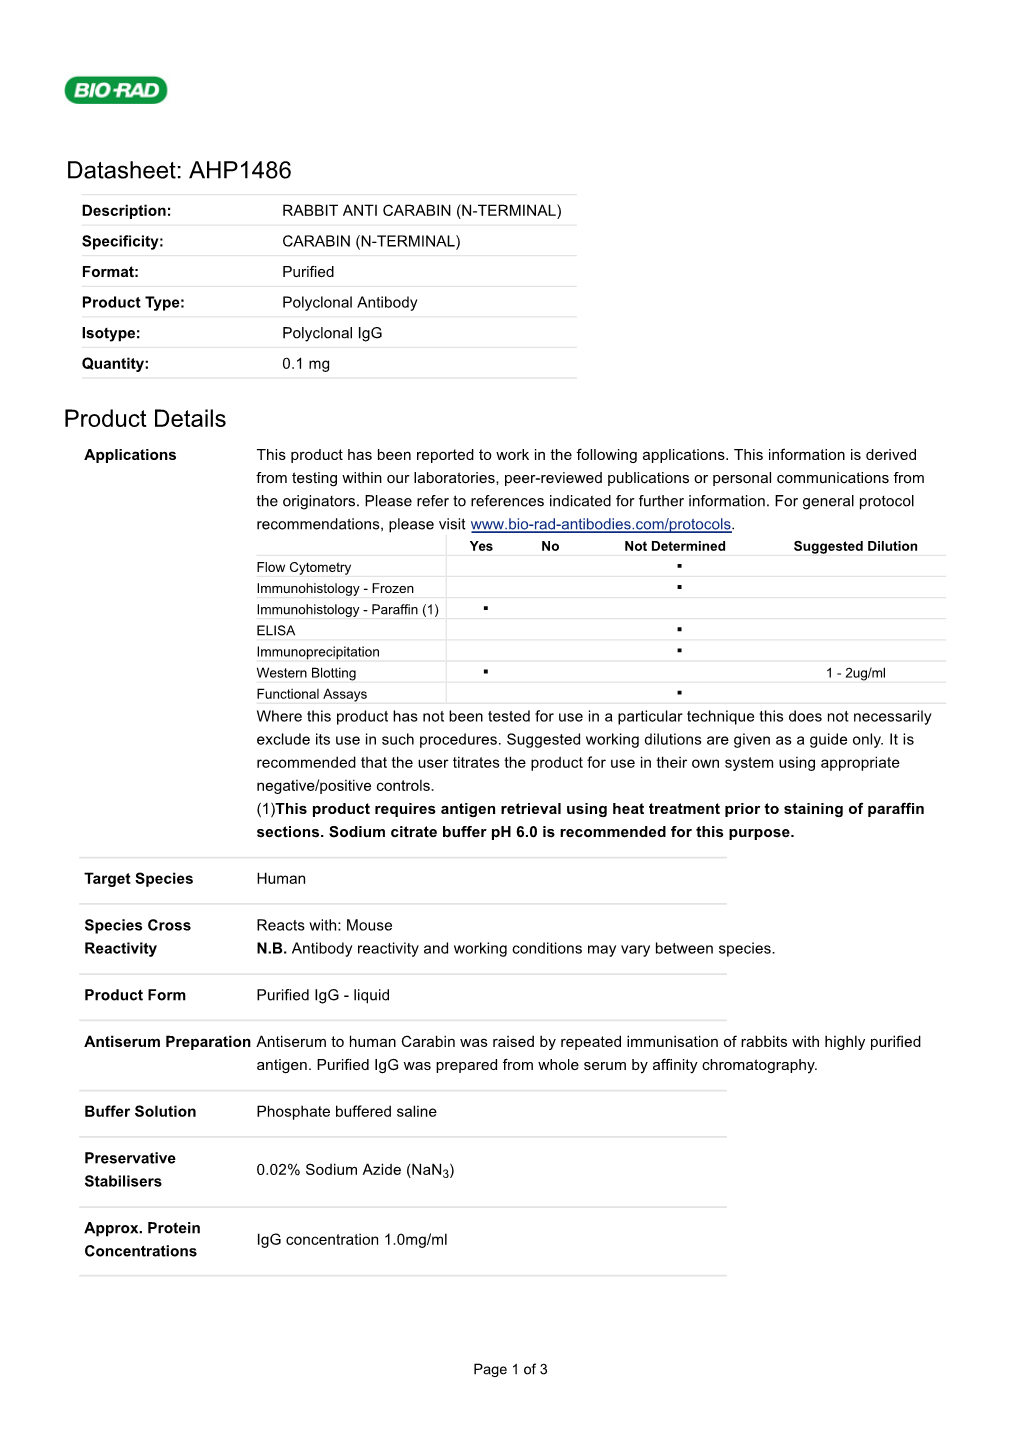 Datasheet: AHP1486 Product Details